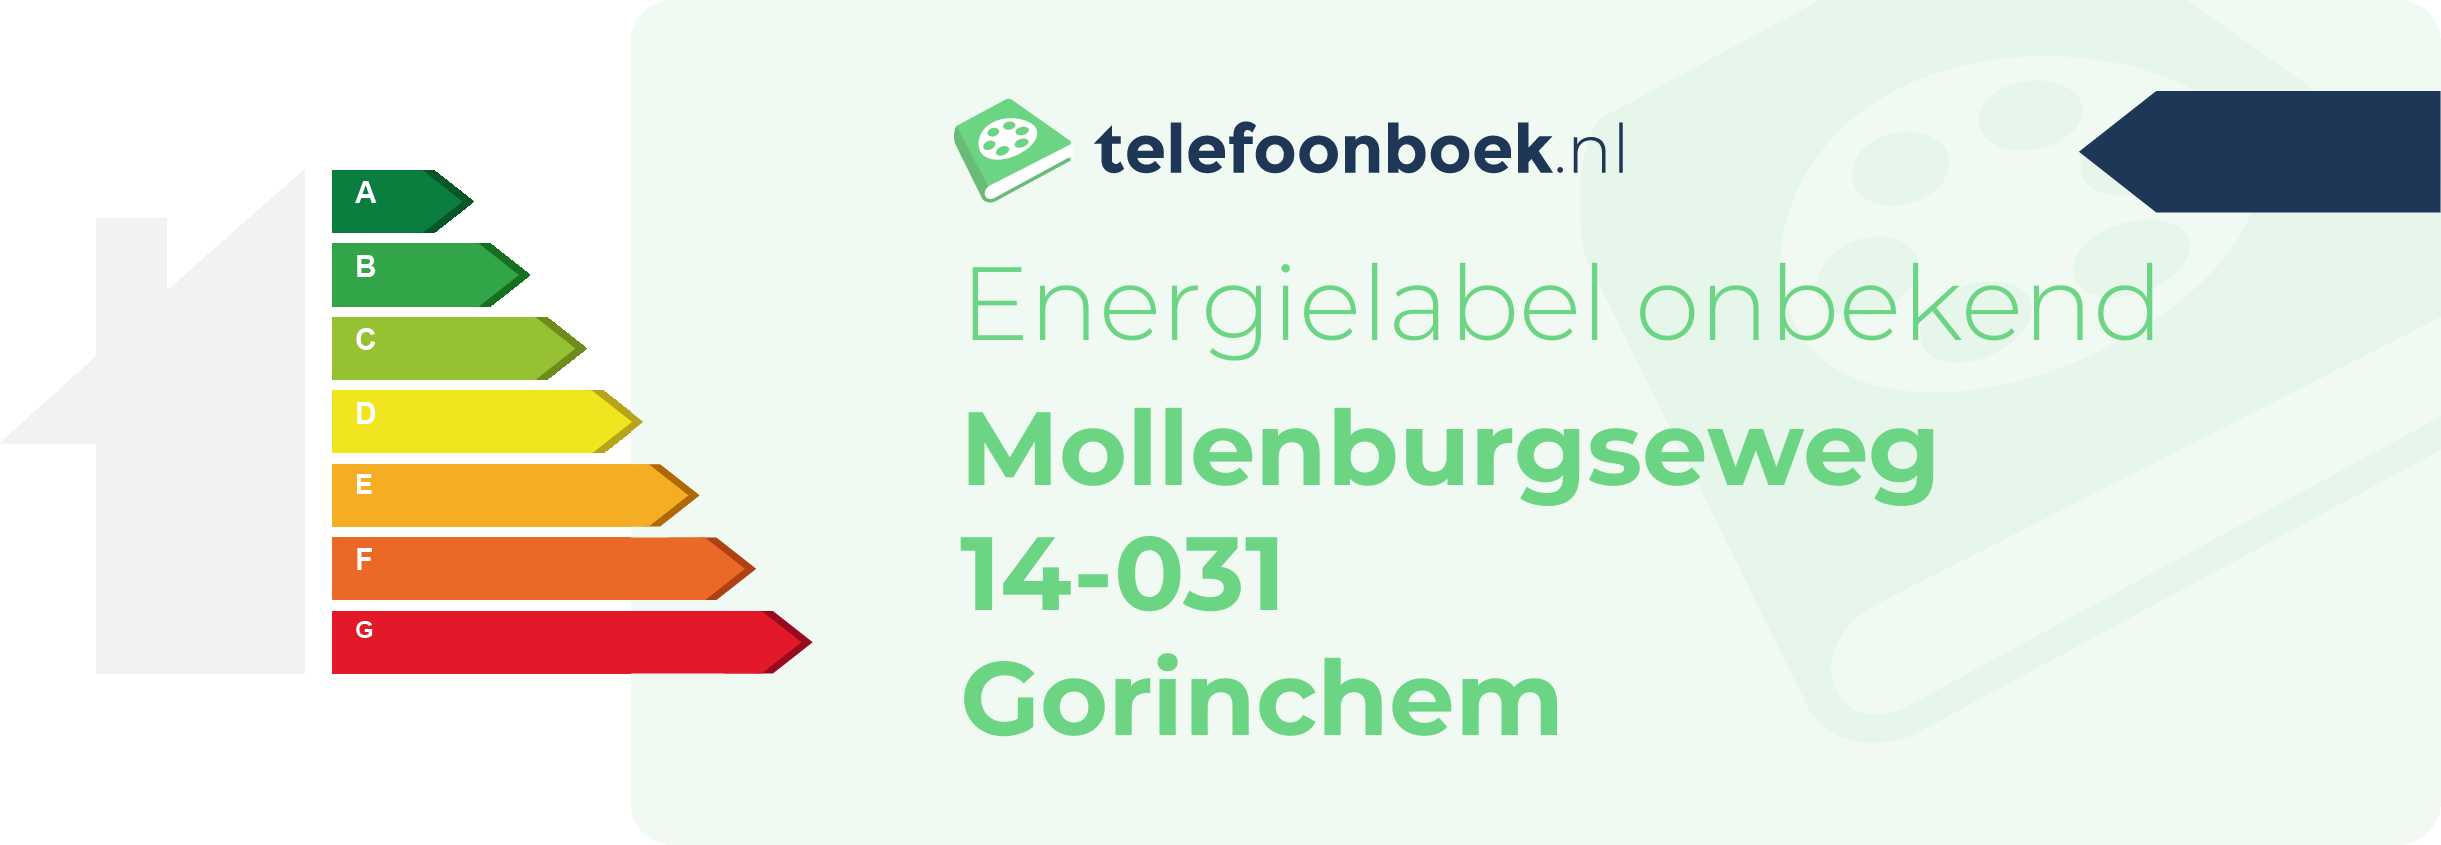 Energielabel Mollenburgseweg 14-031 Gorinchem